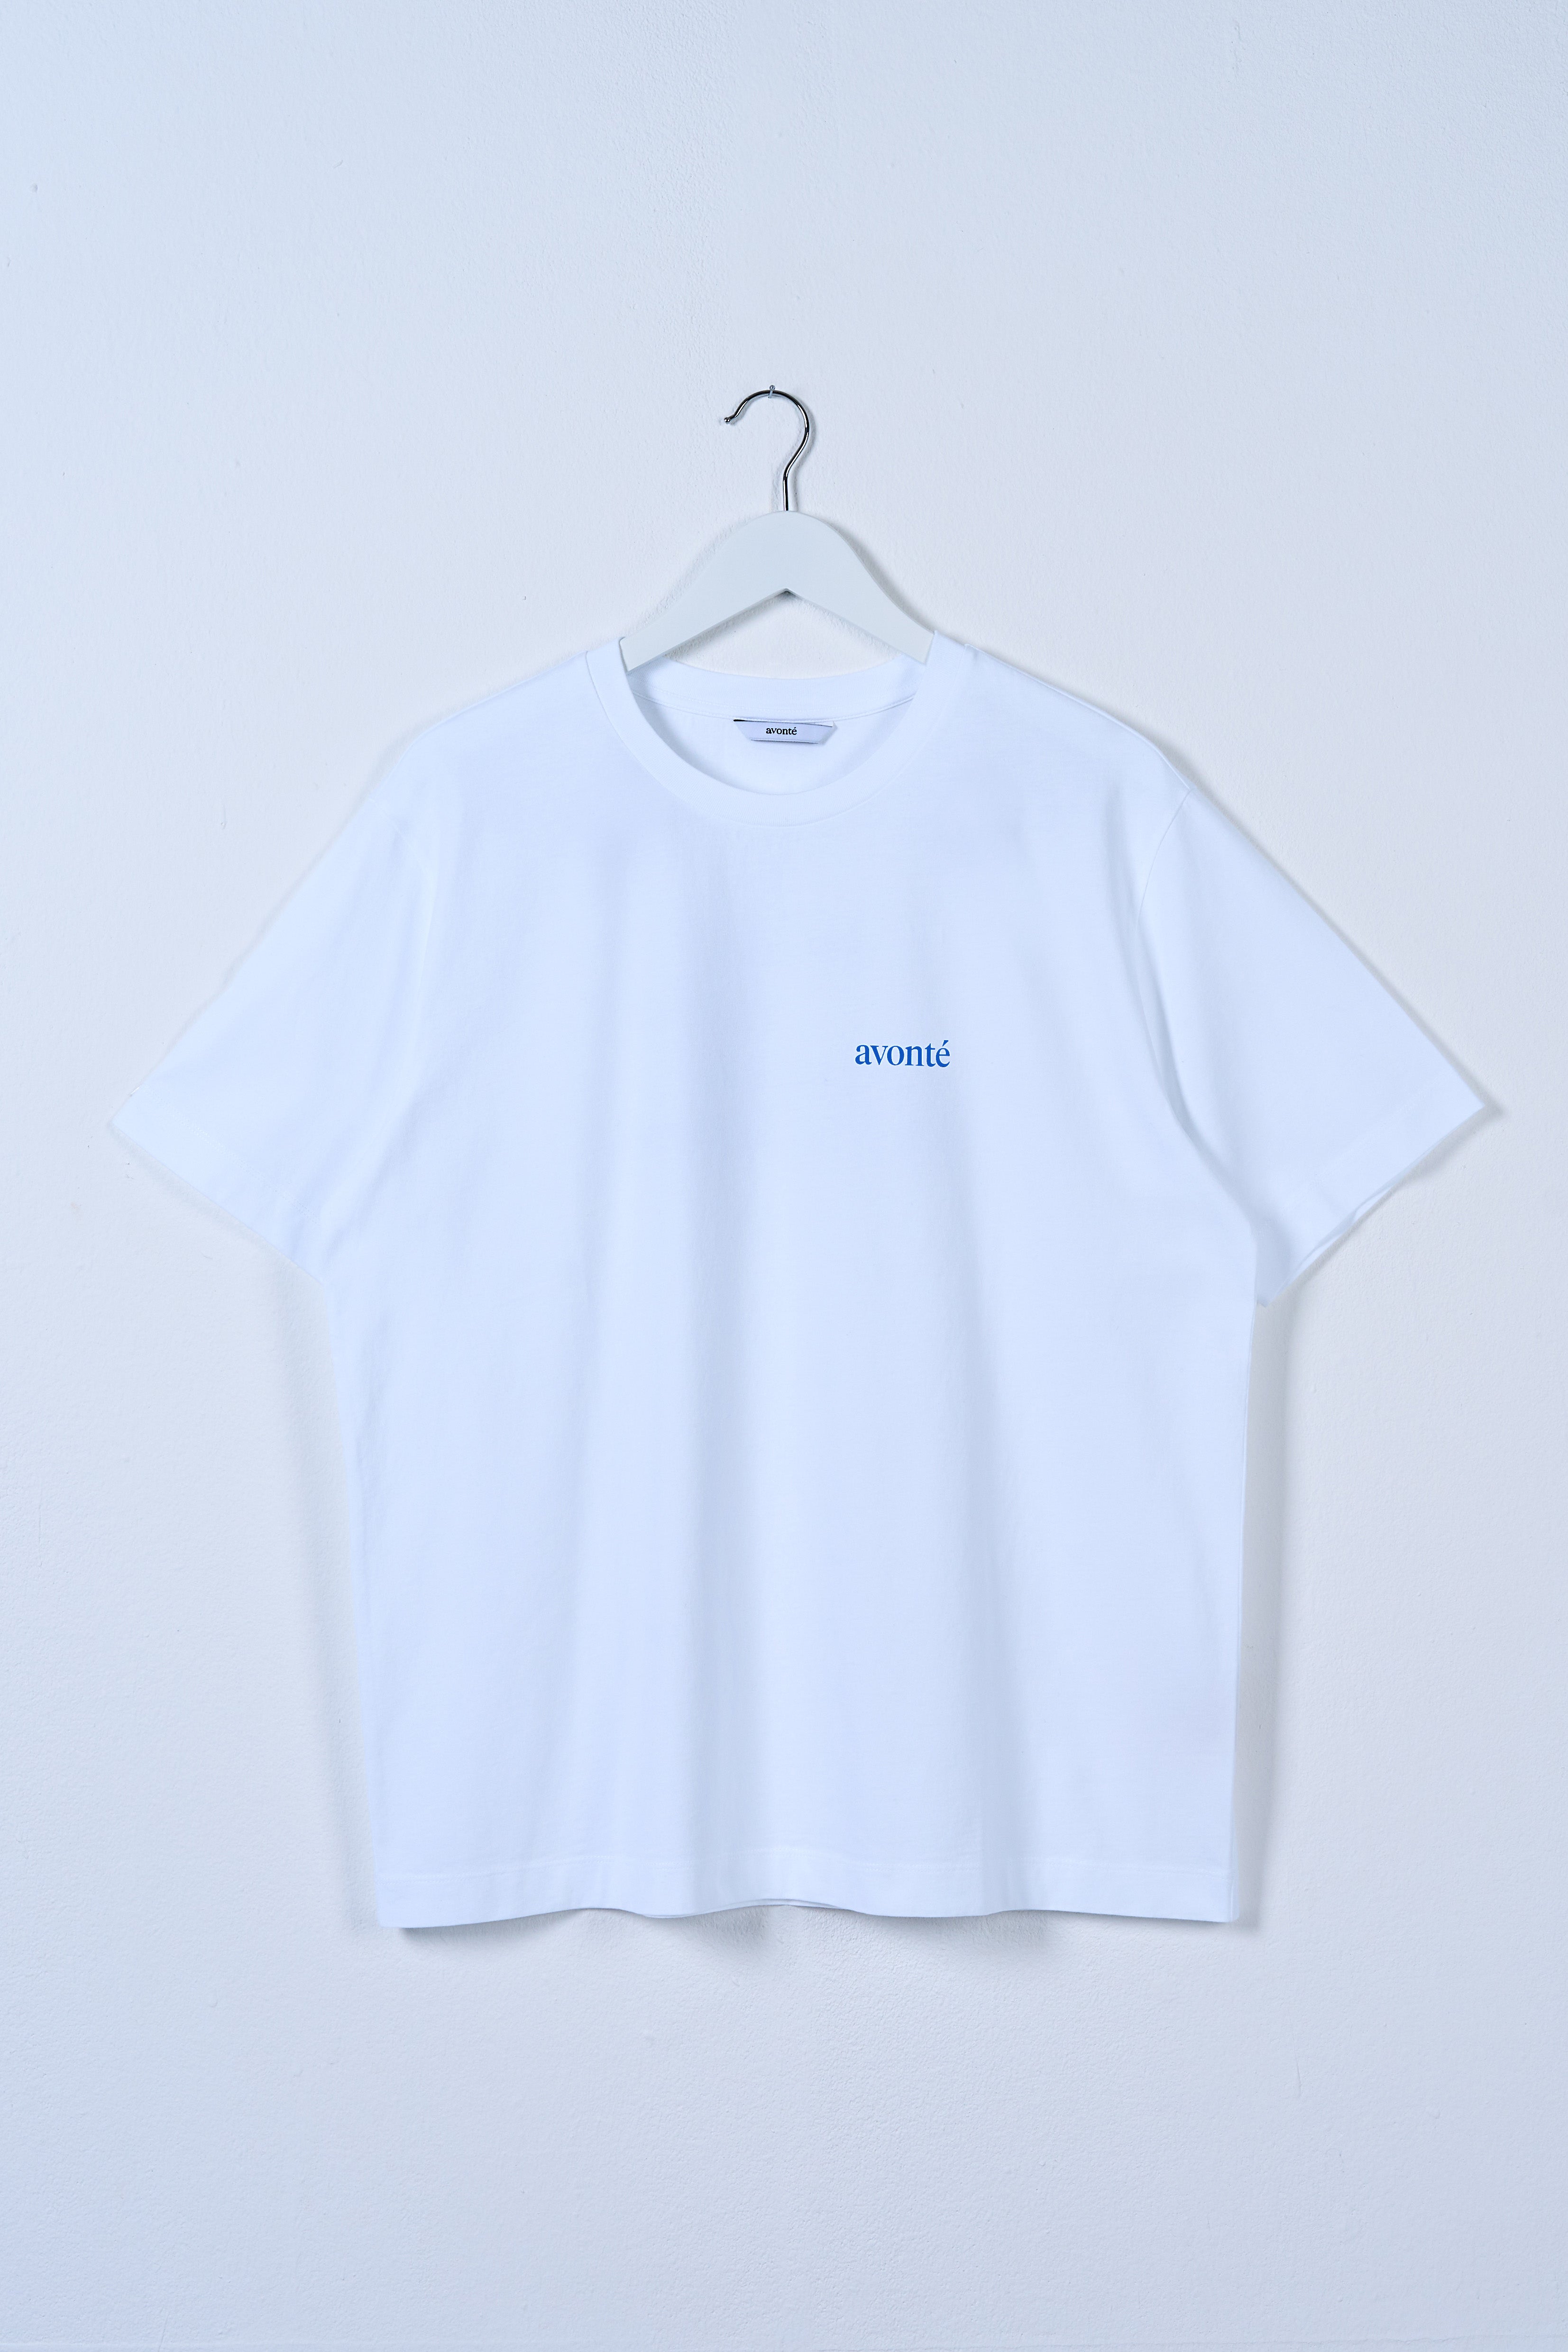 T-Shirt Avonteé Home - white